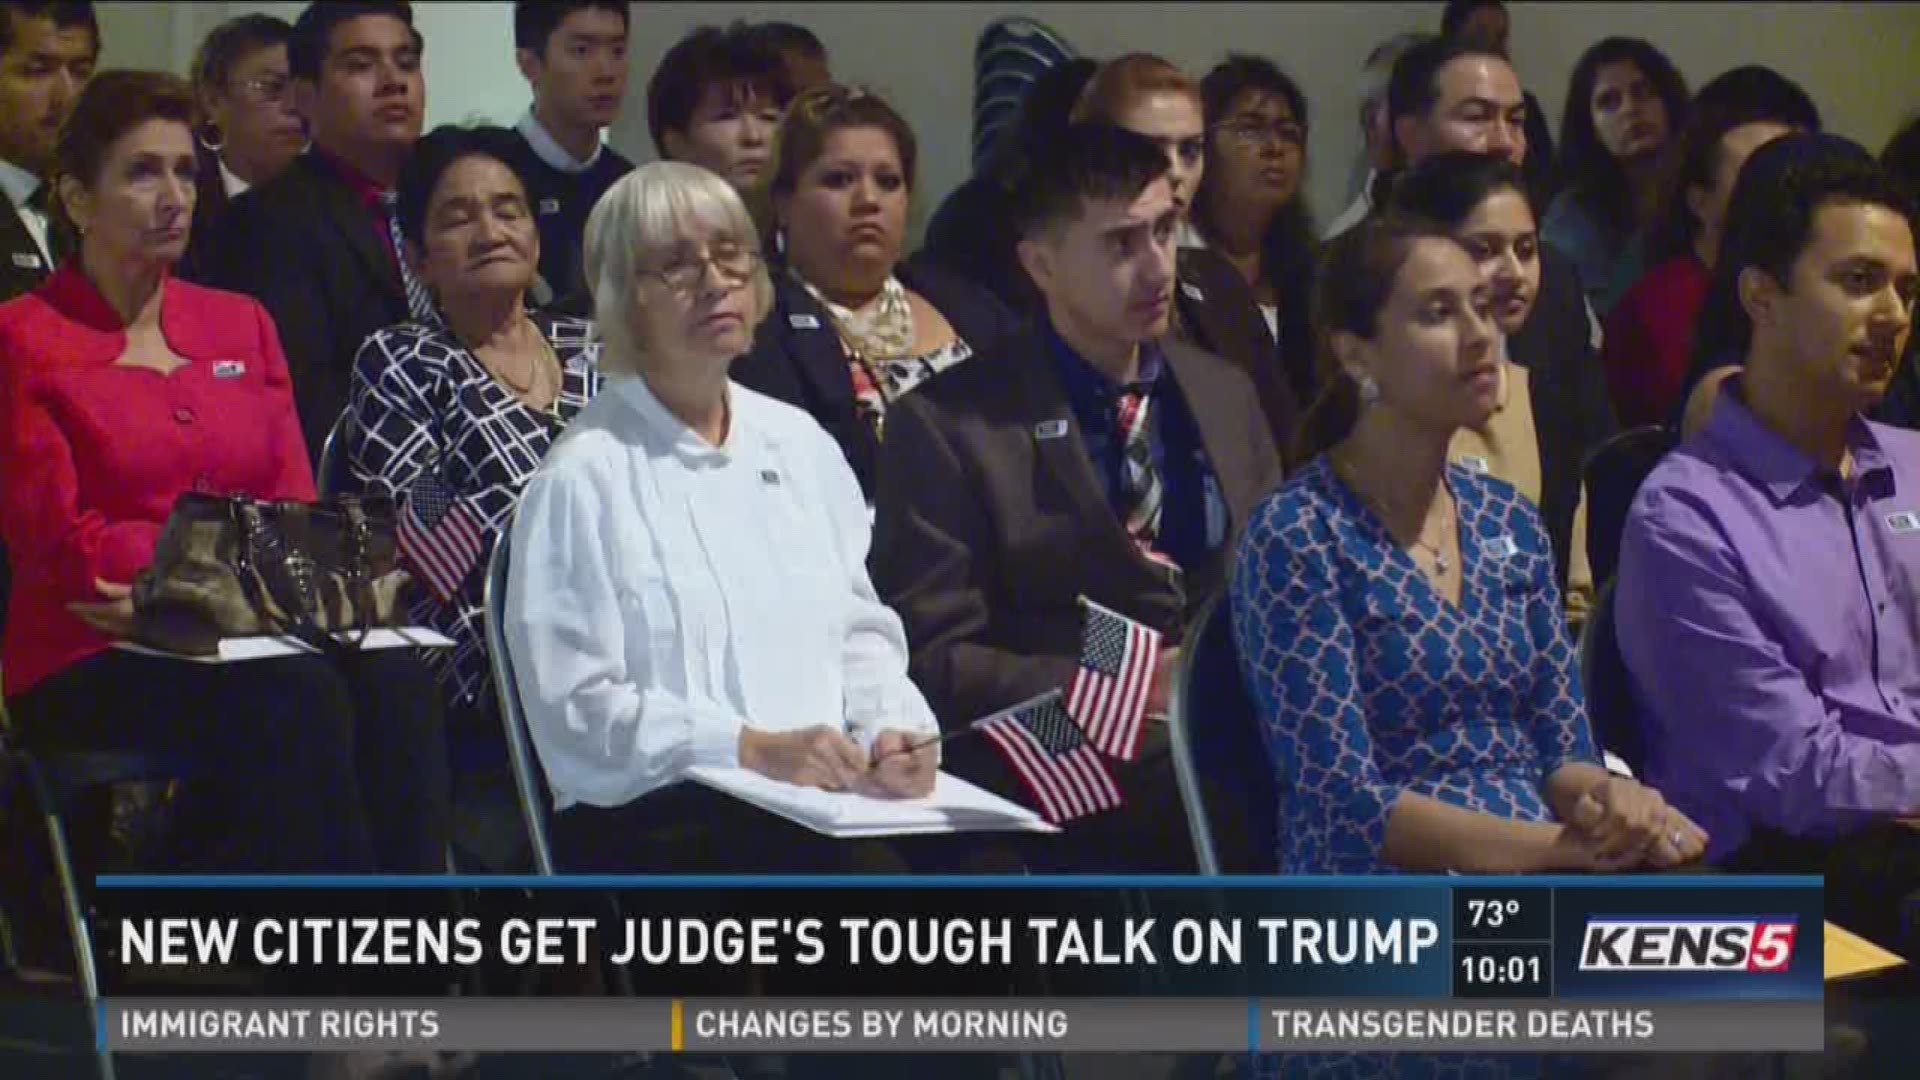 New citizens get judge's tough talk on Trump